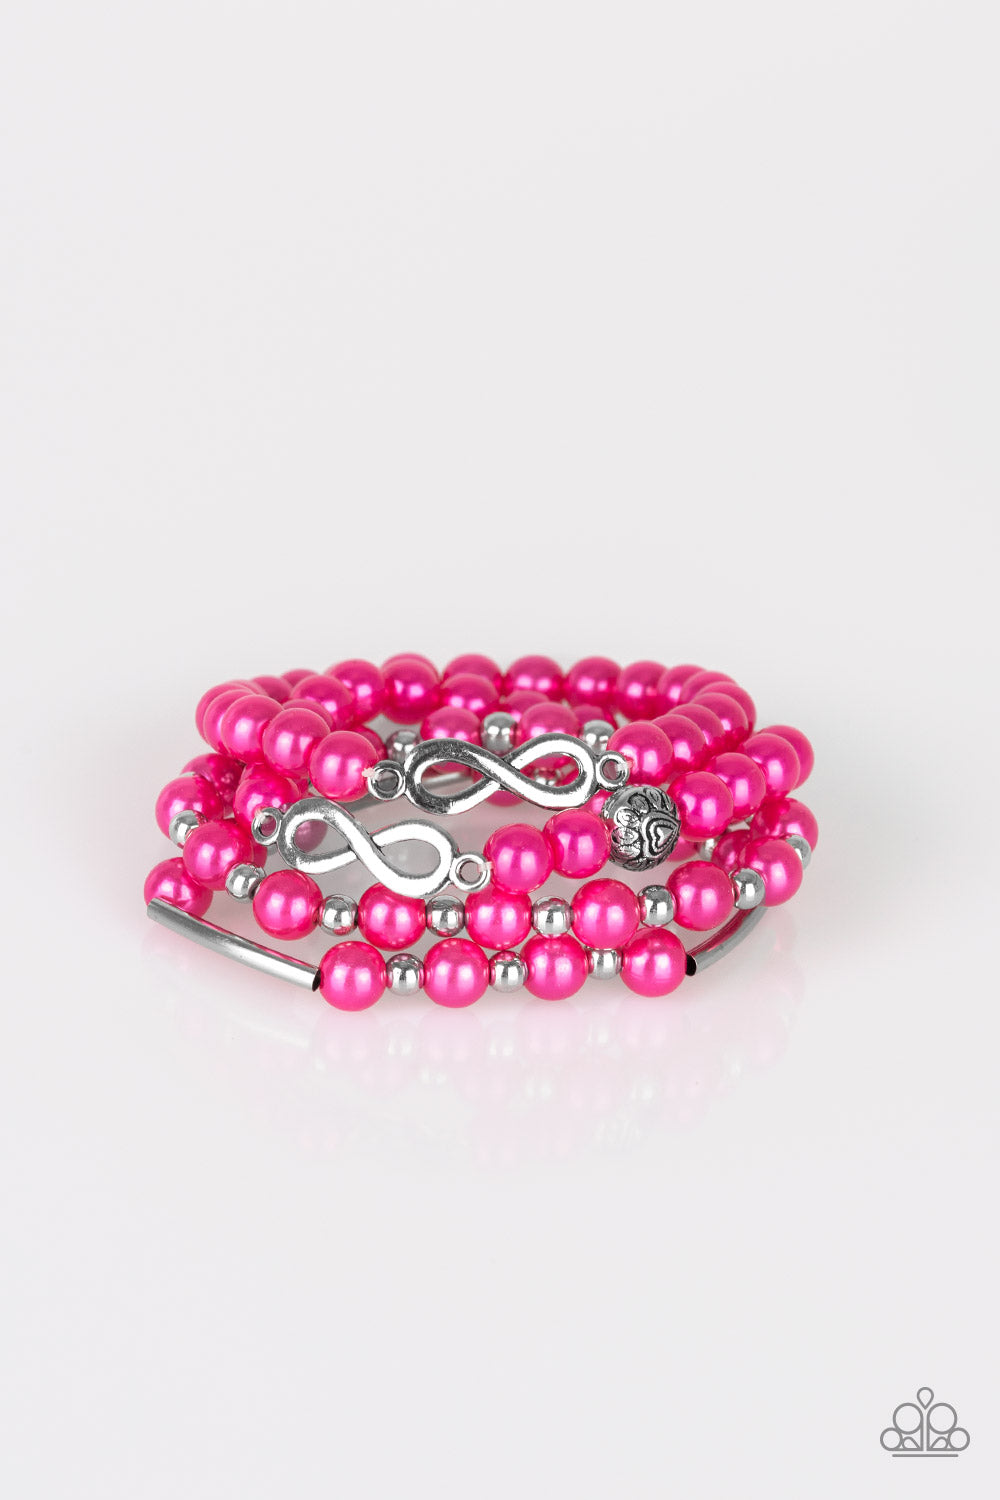 Assorted Hot Pink Mirage Bracelets (price is per bracelet)